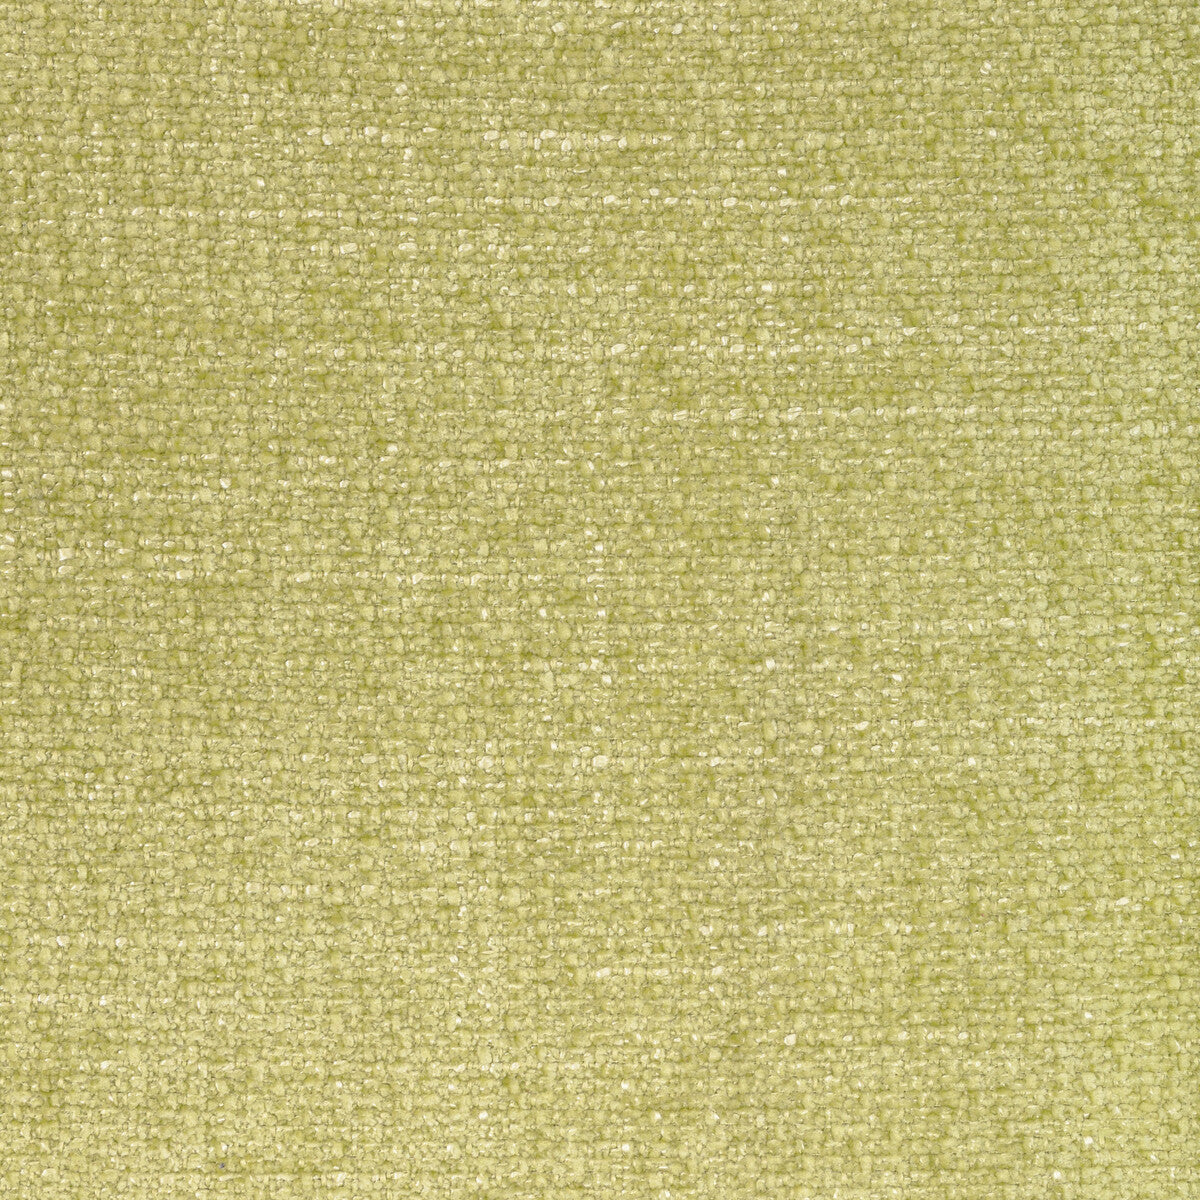 Kravet Smart fabric in 36578-23 color - pattern 36578.23.0 - by Kravet Smart in the Performance Kravetarmor collection